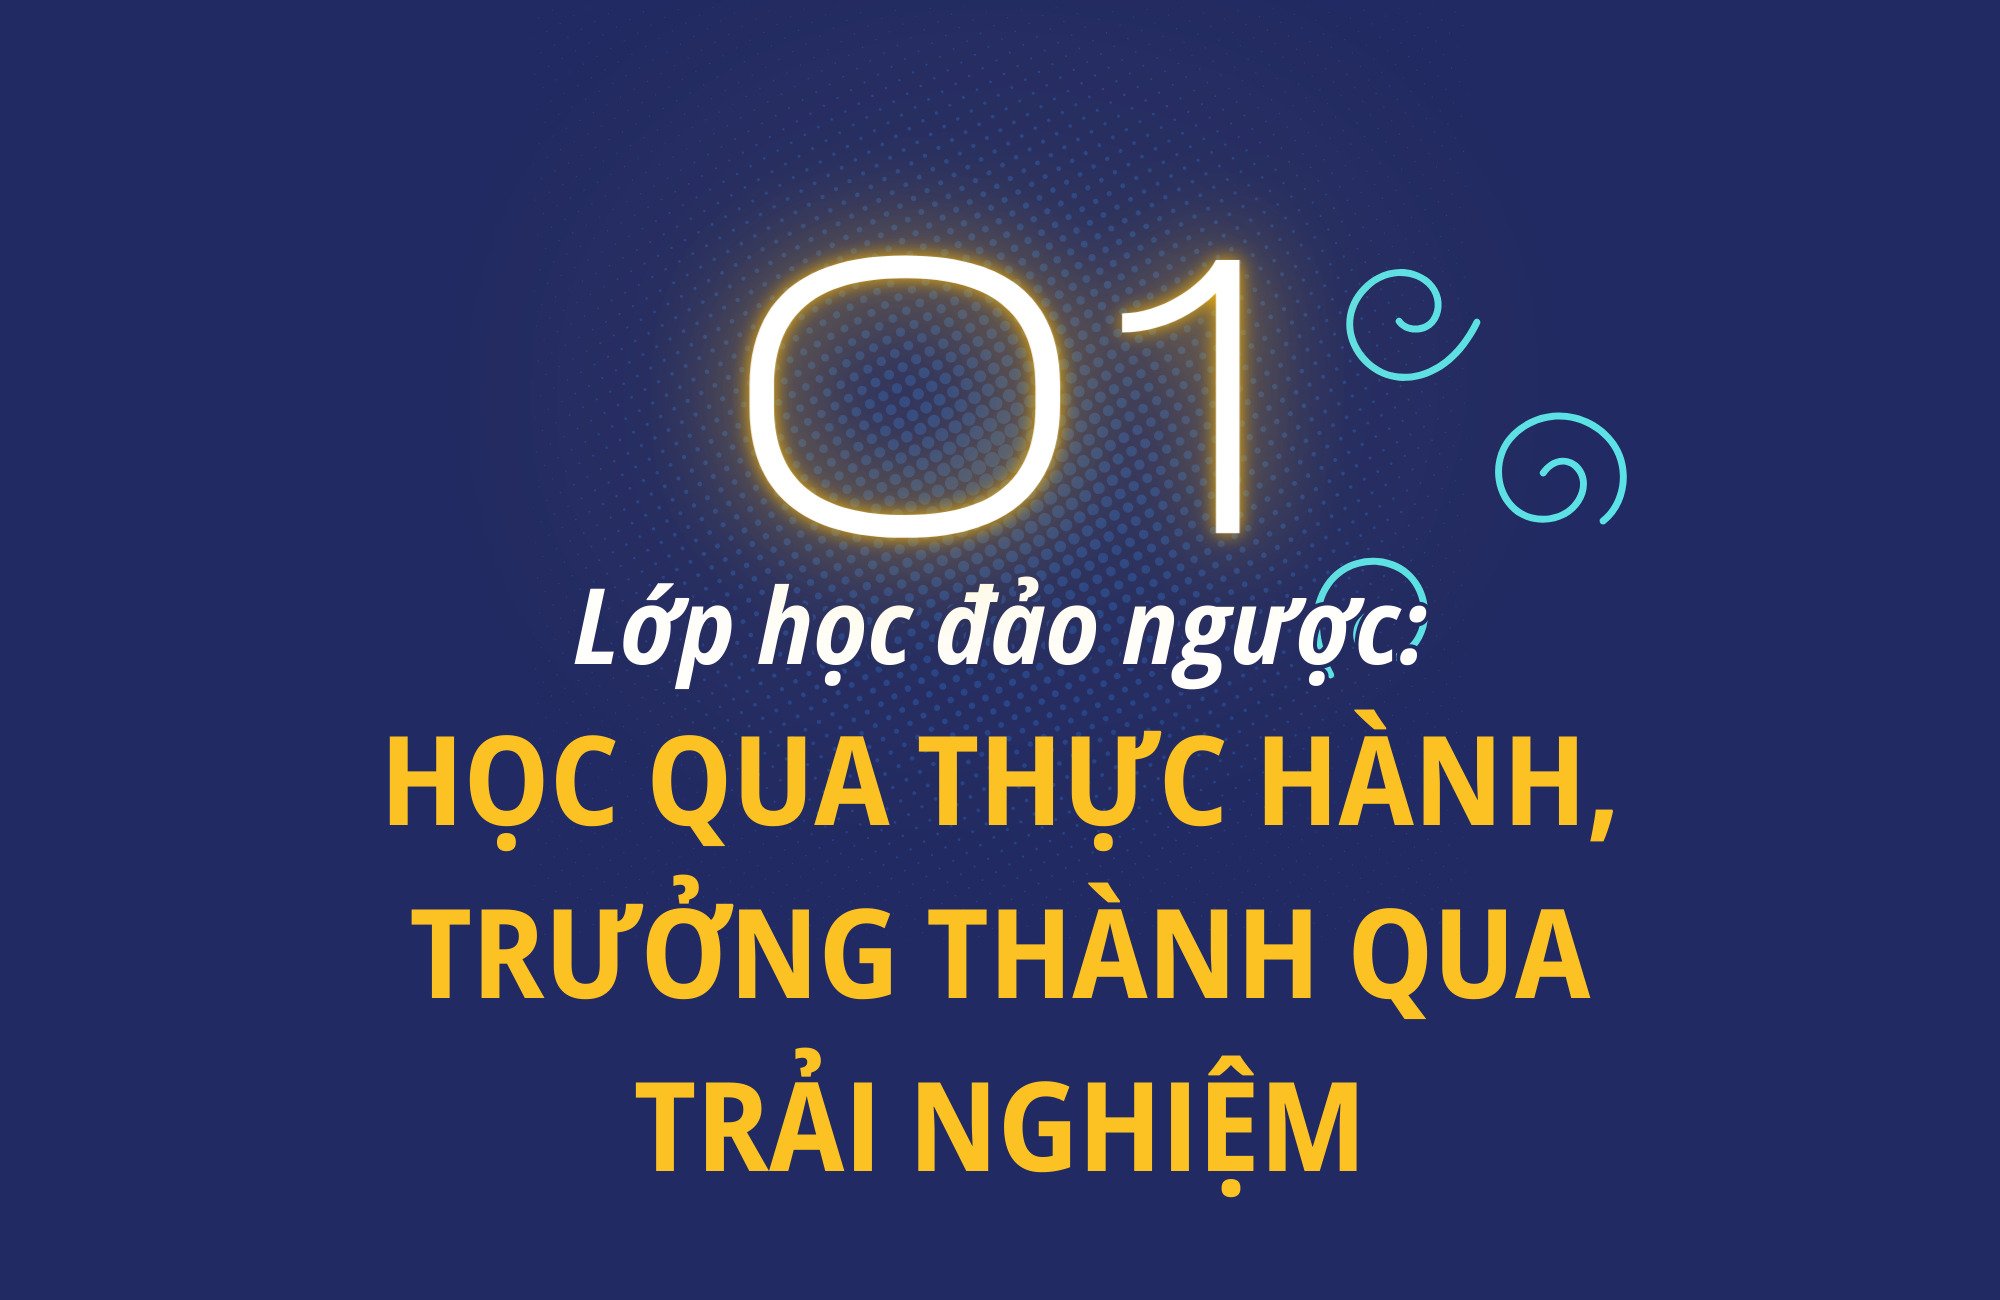 TRUONG HOC HANH PHUC THUC NGHIEM VICTORY (6)